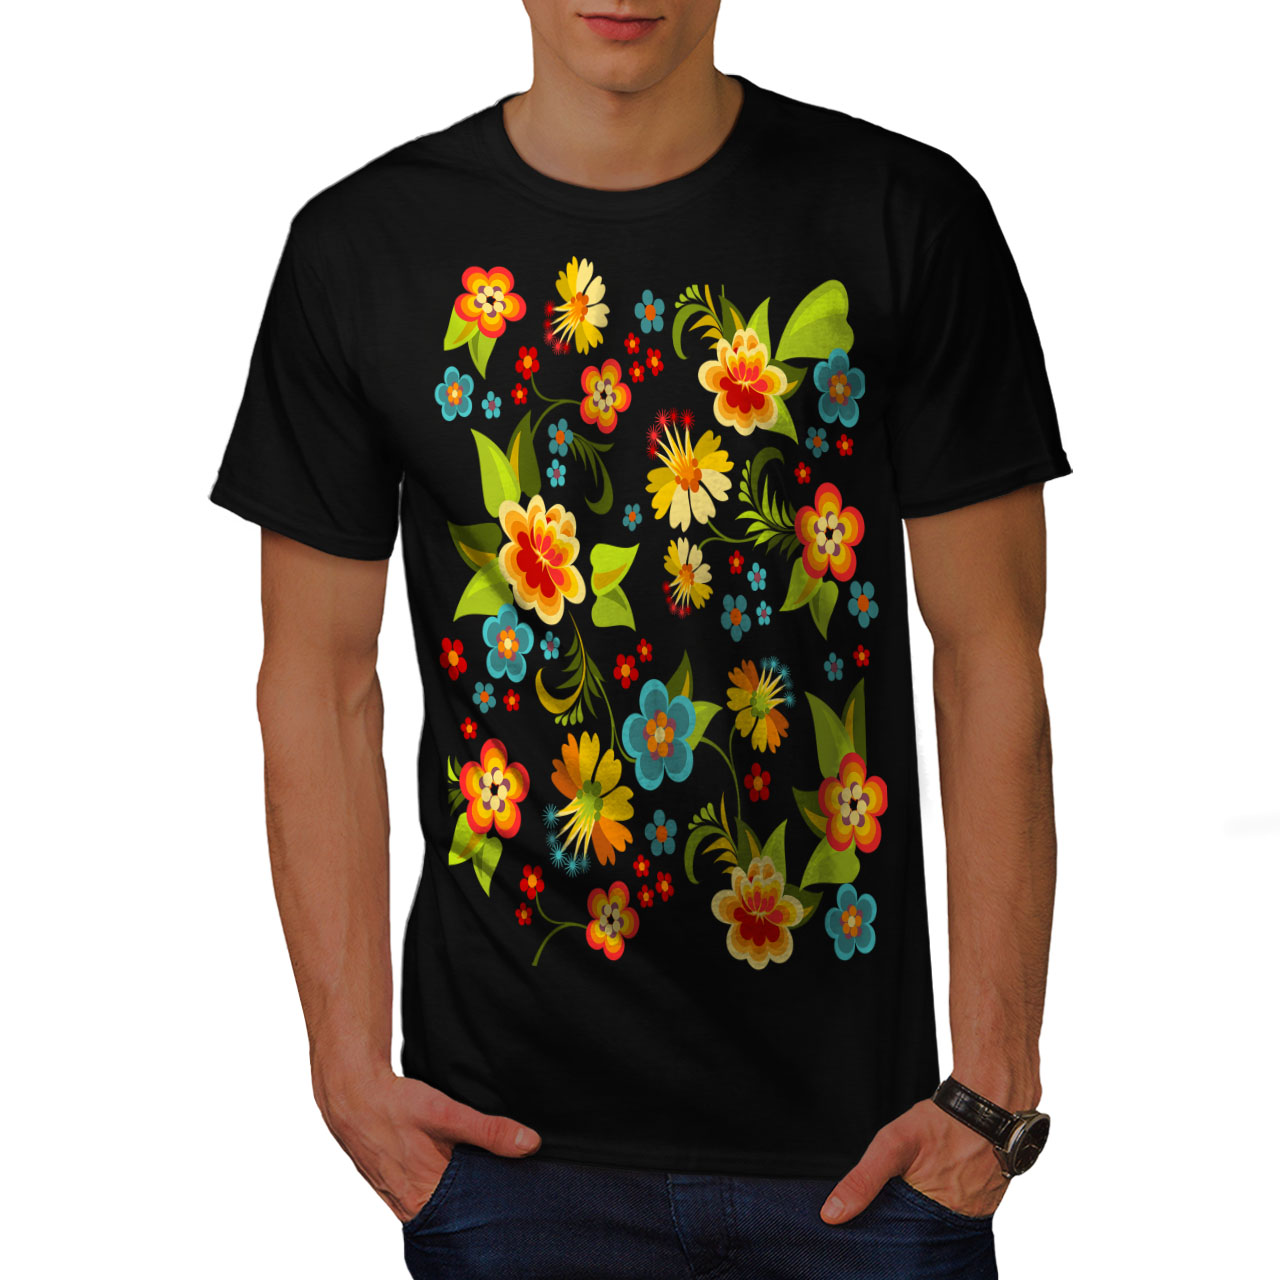 Wellcoda Cute Flower Mens T-shirt Pattern Graphic Design Printed Tee 